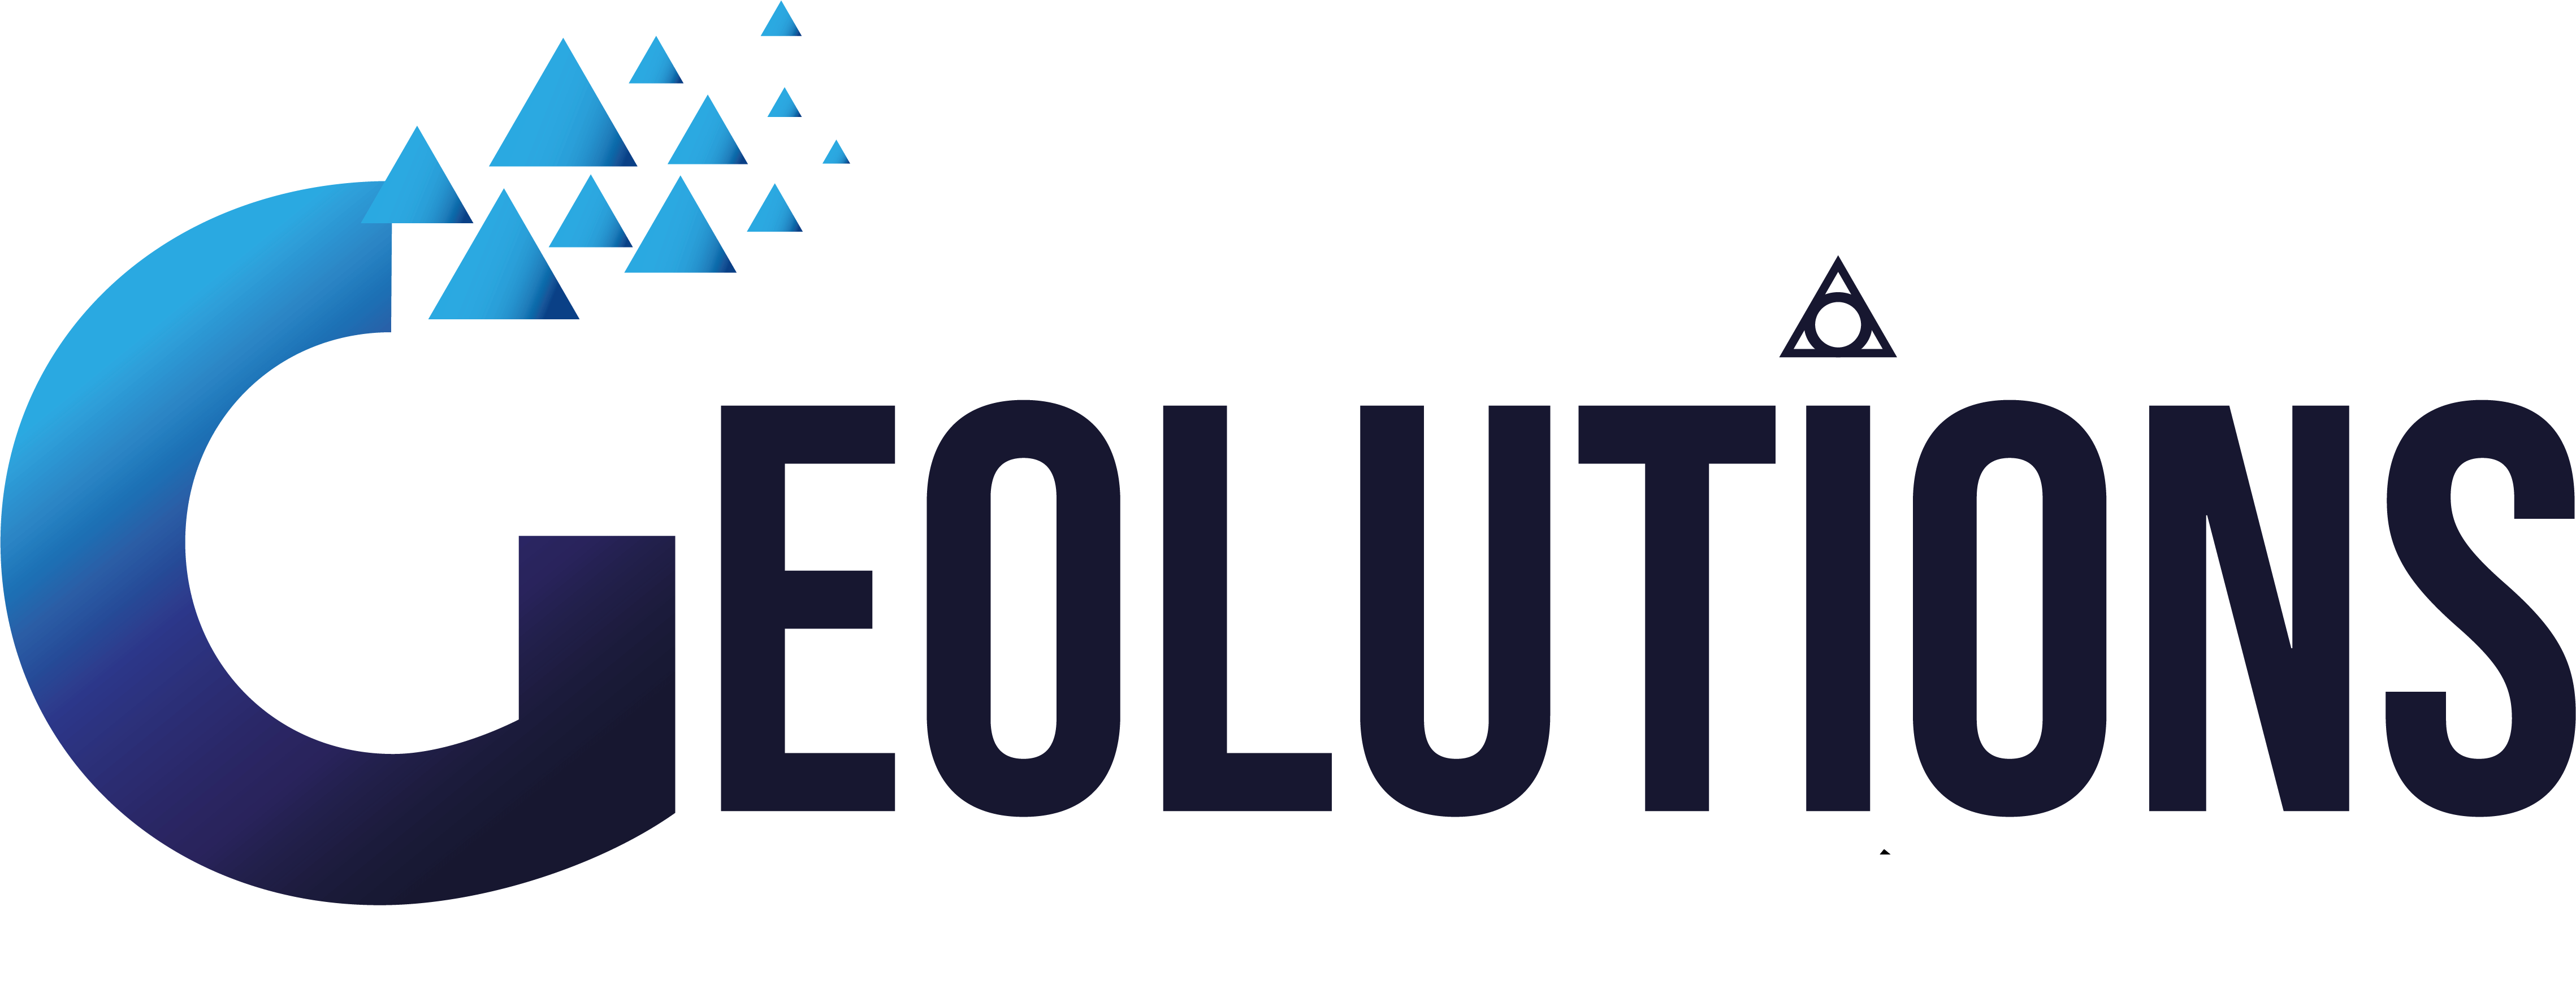 Logo Geolutions